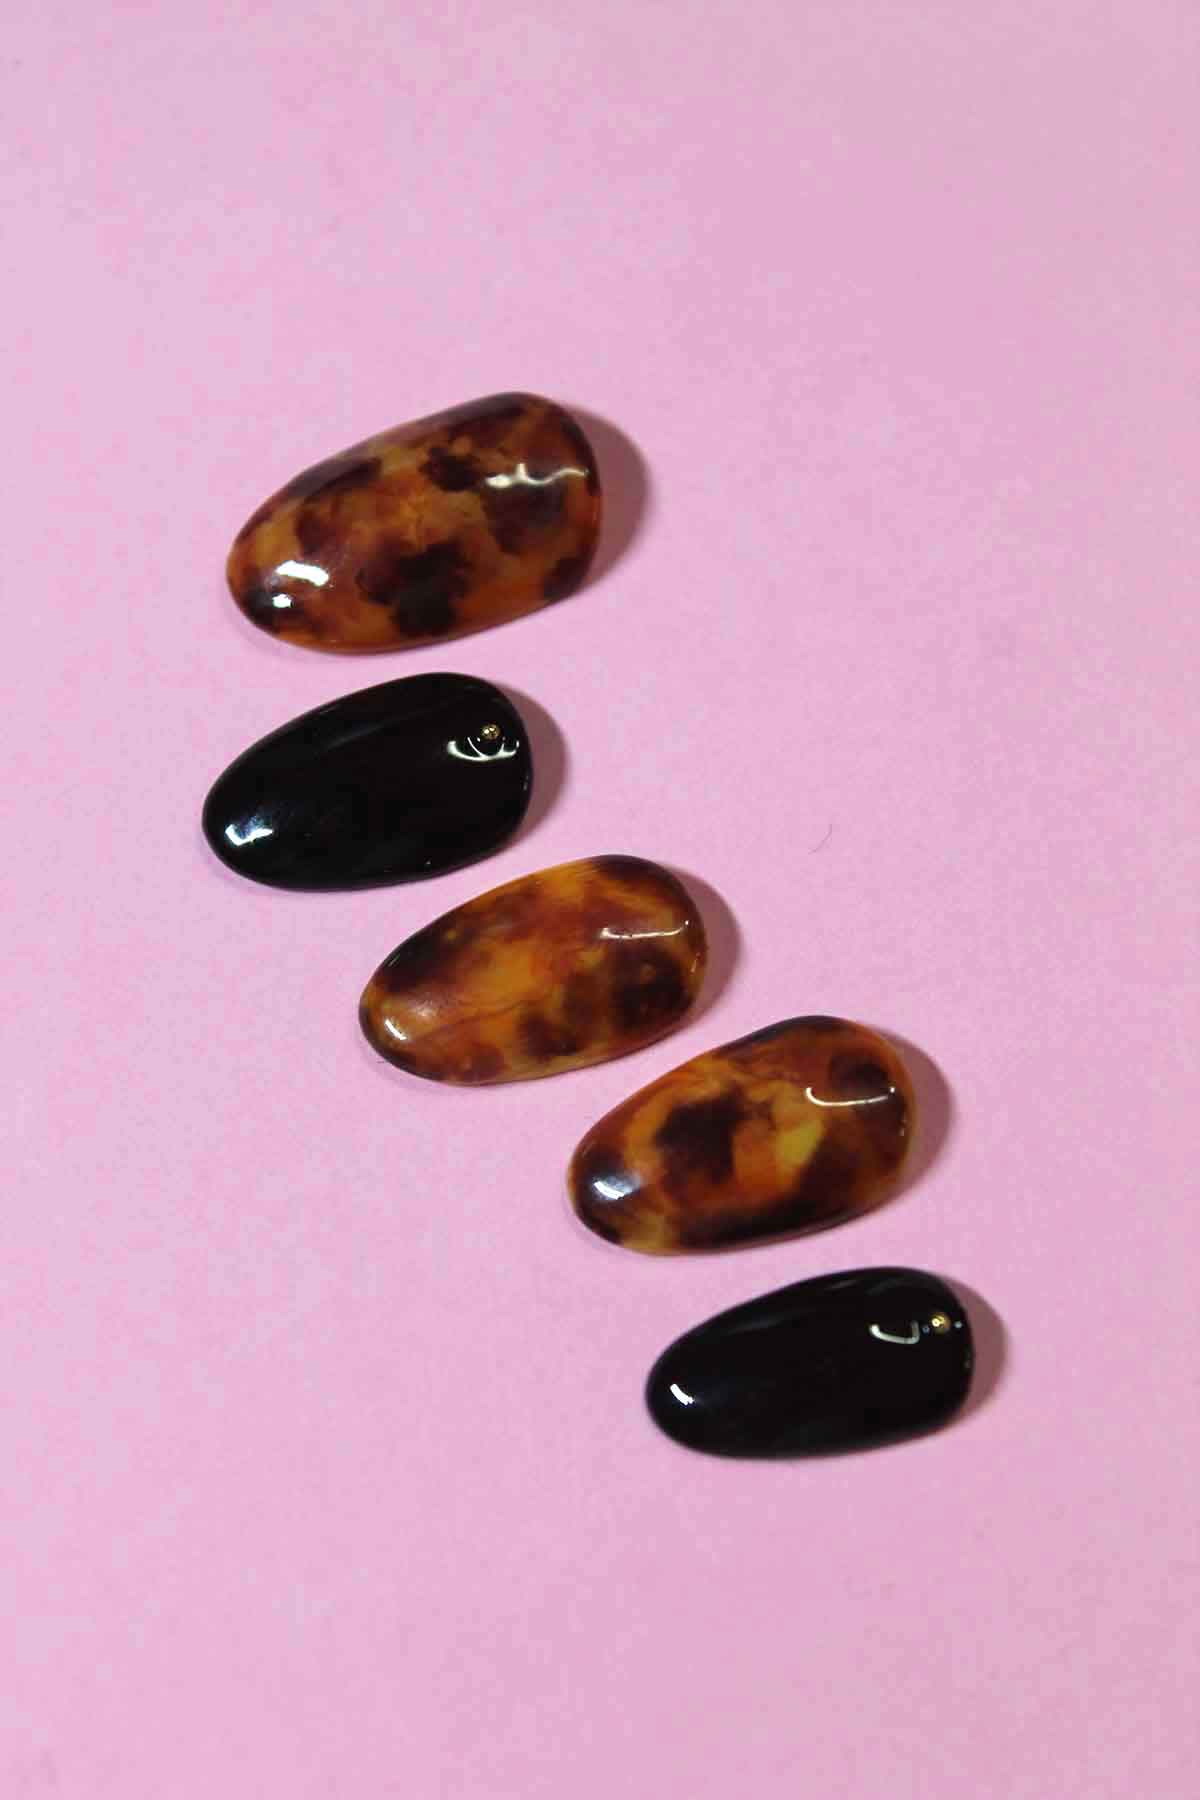 nail art de carey unas decoradas ambar (1)